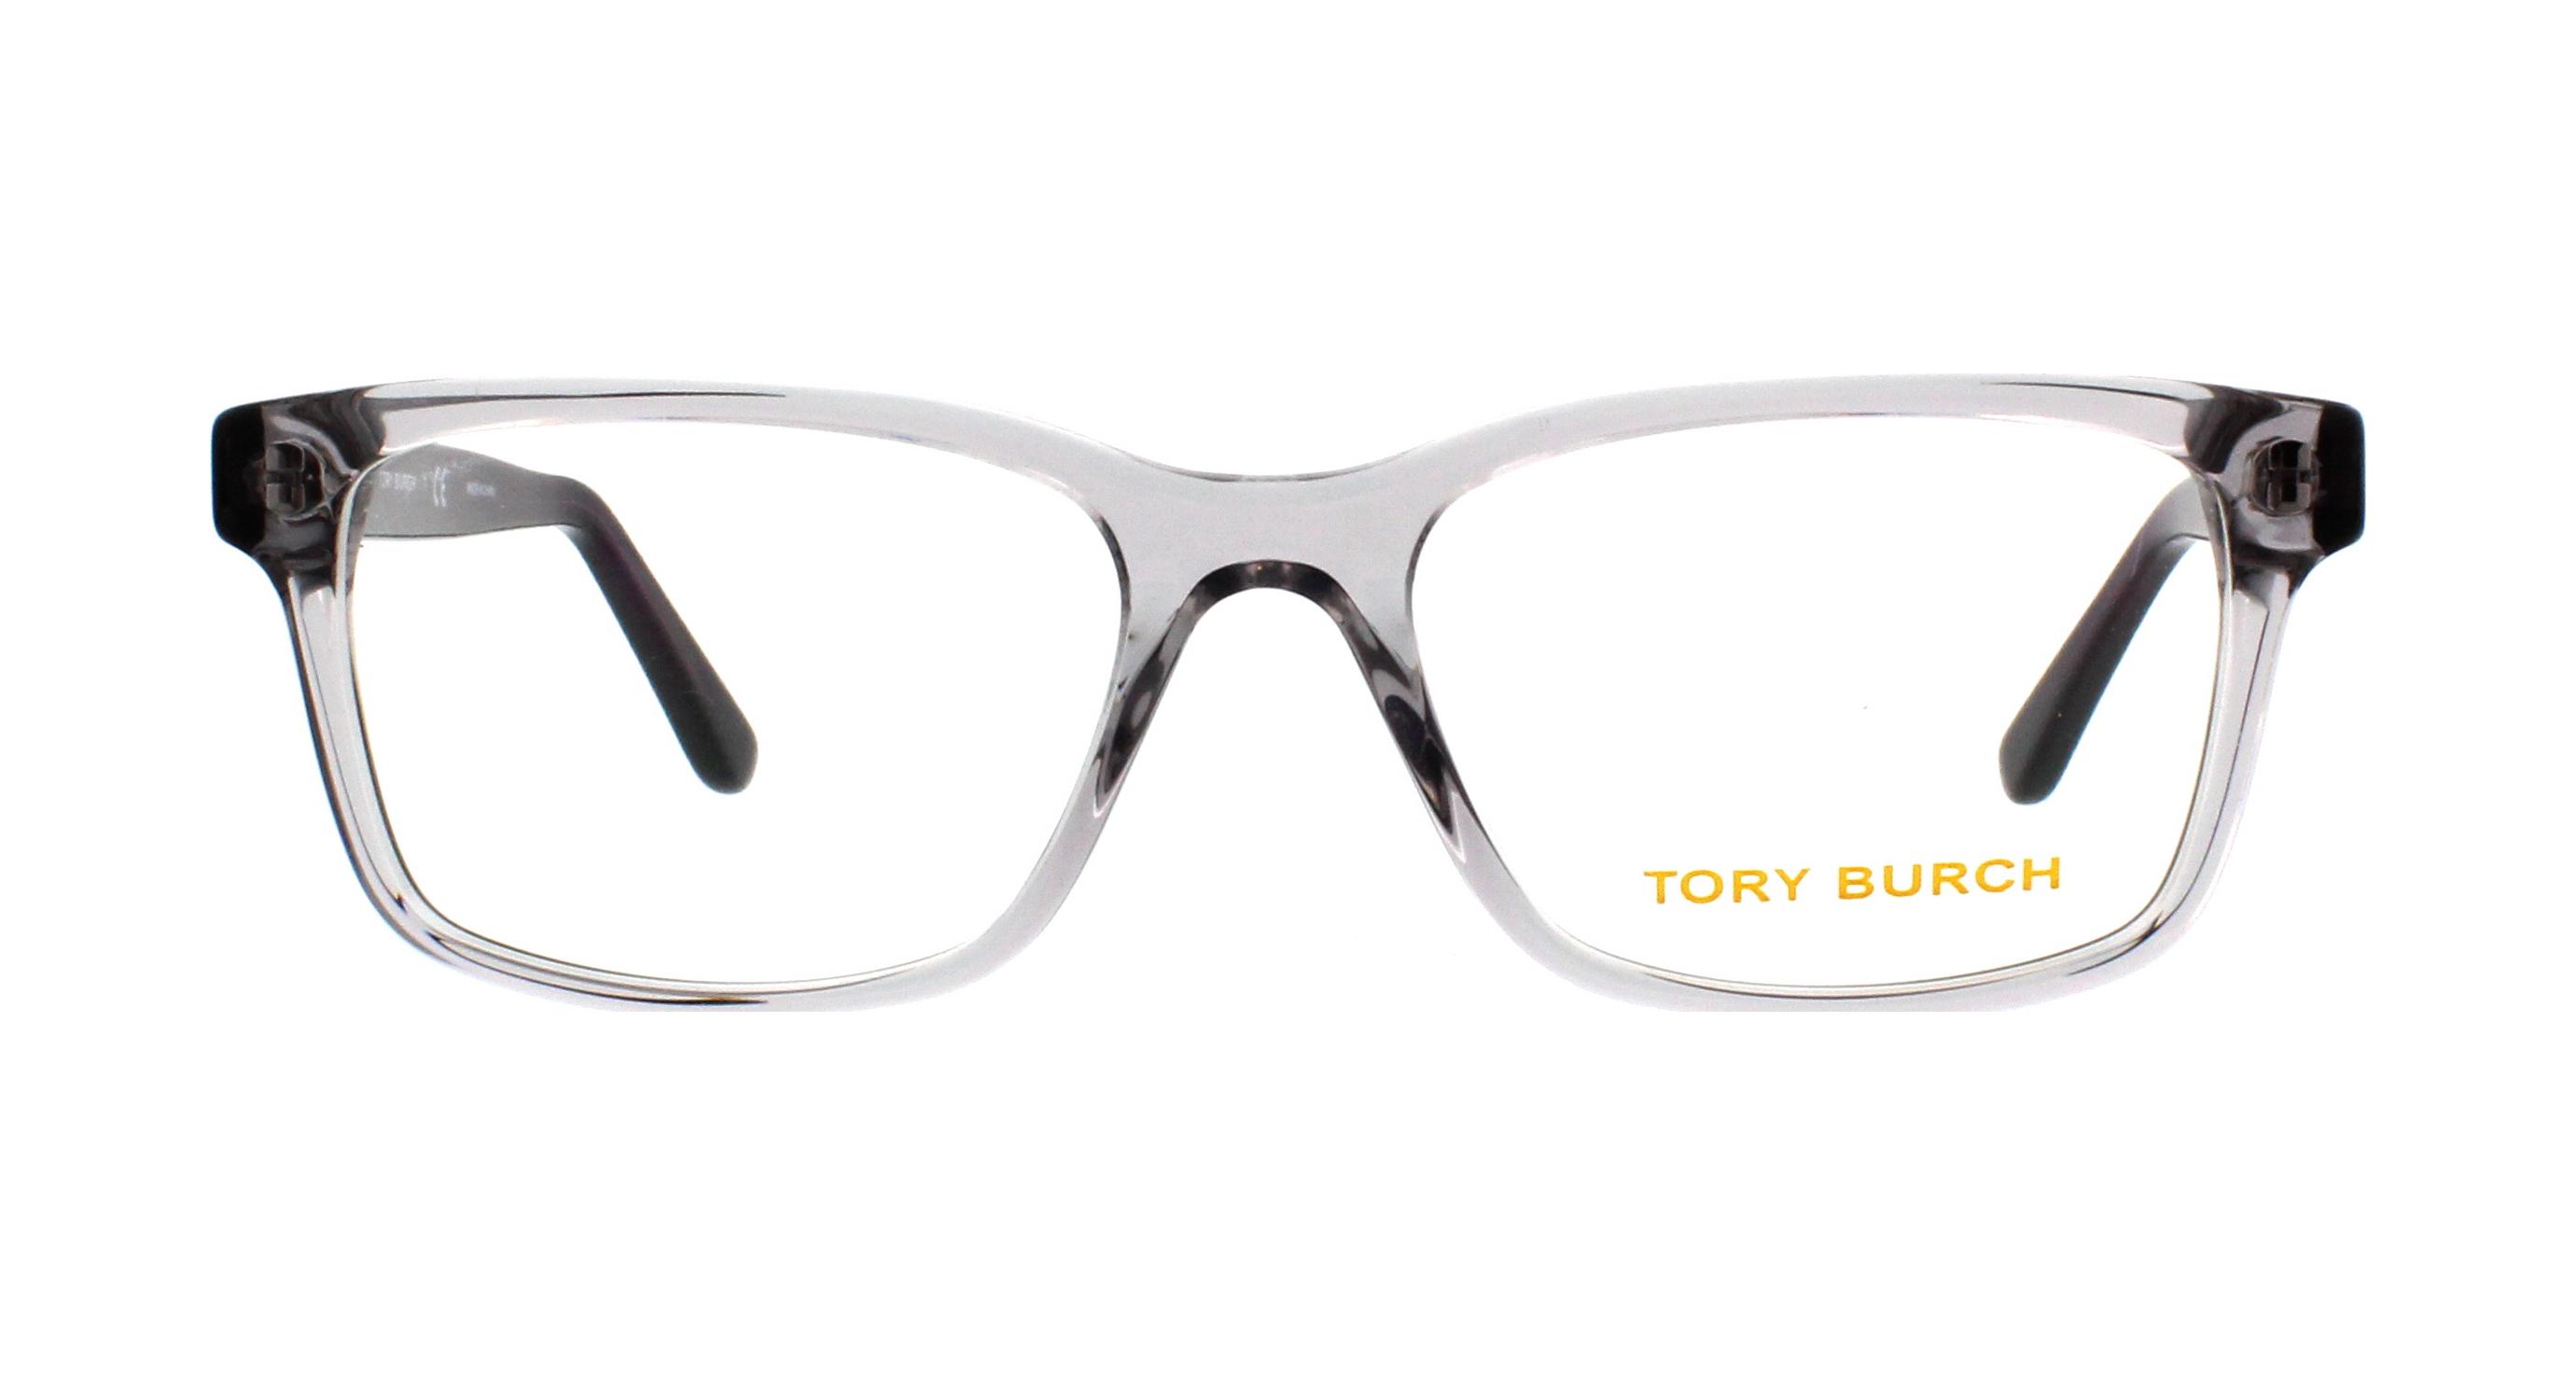 Arriba 86+ imagen tory burch 2064 eyeglasses